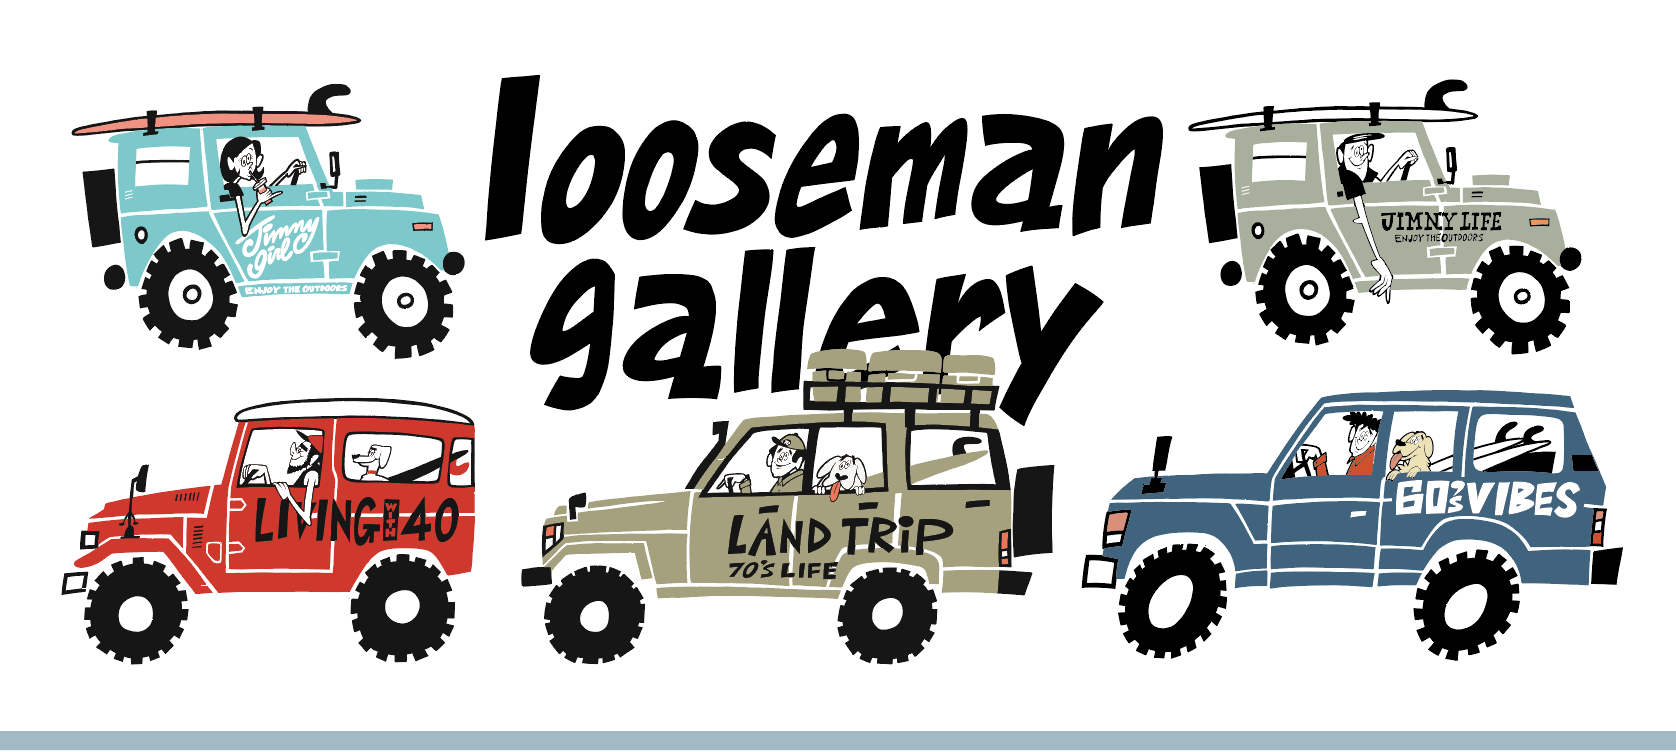 LOOSEMAN ART GALLERY